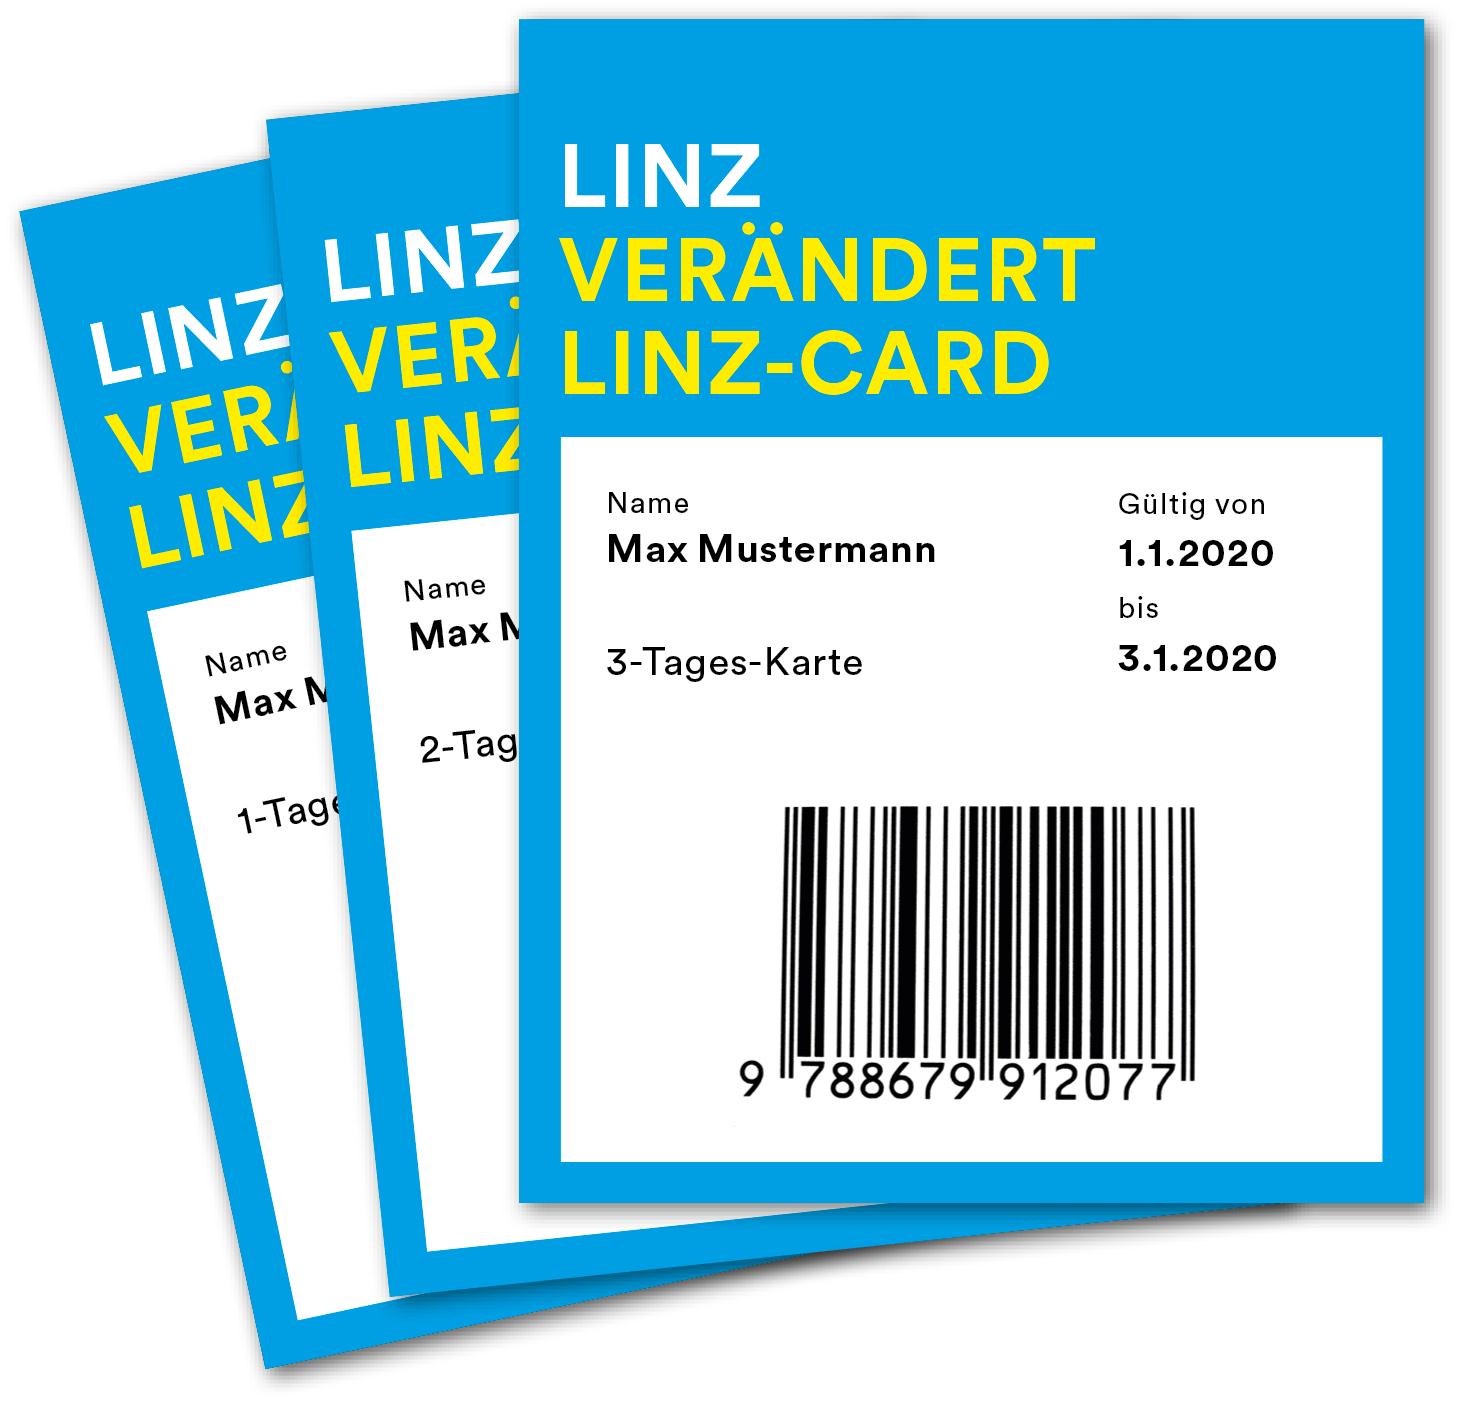 Linz Card